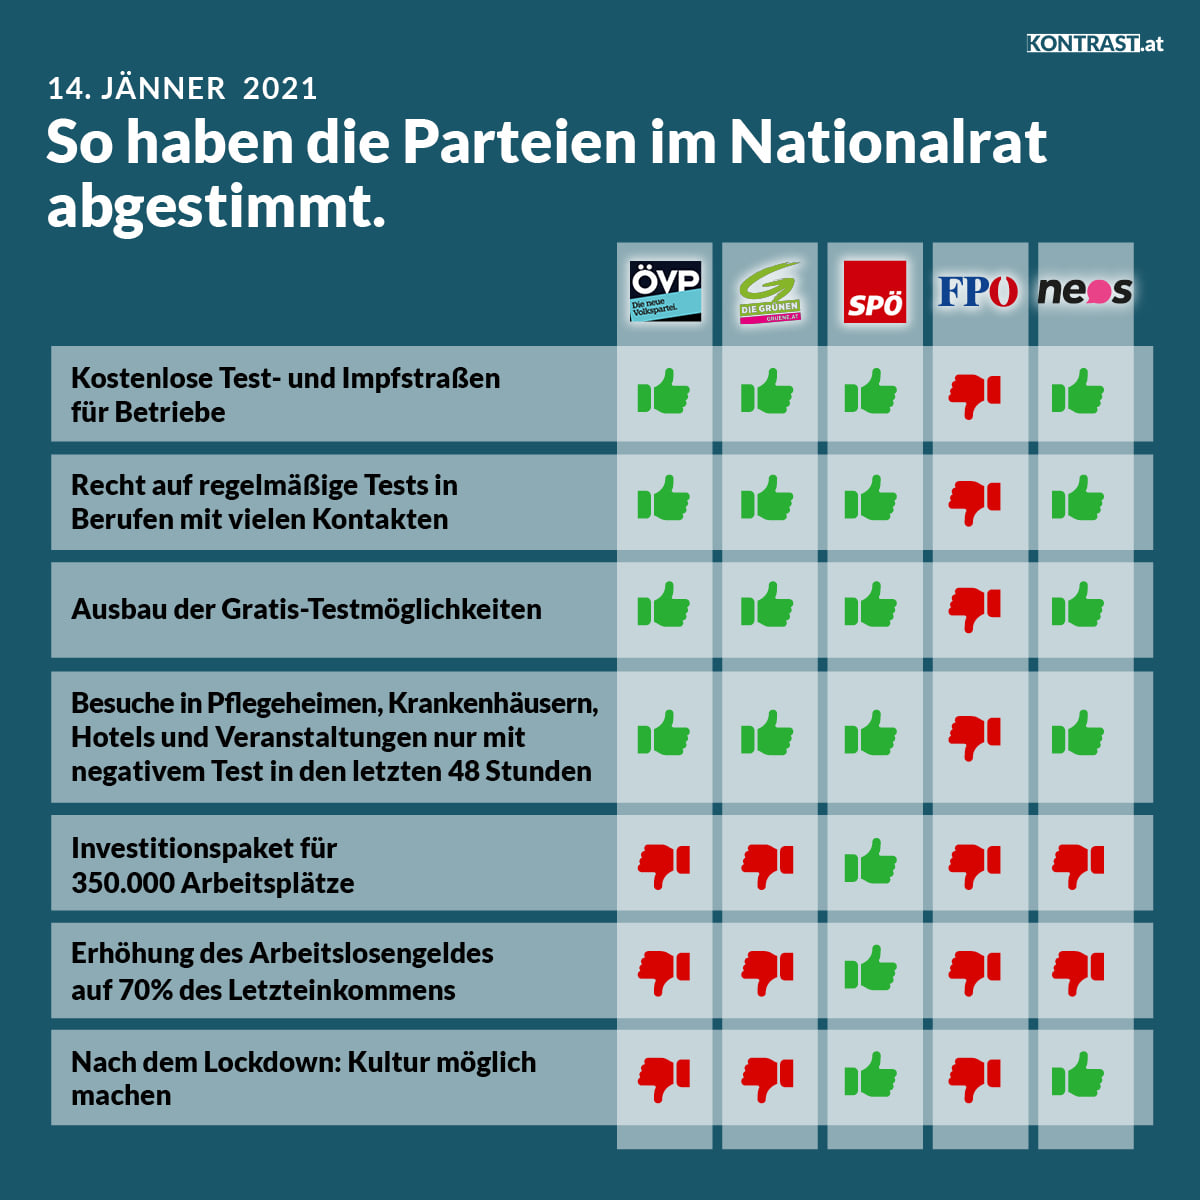 Abstimmungsverhalten im Nationalrat, 14. Jänner 2021